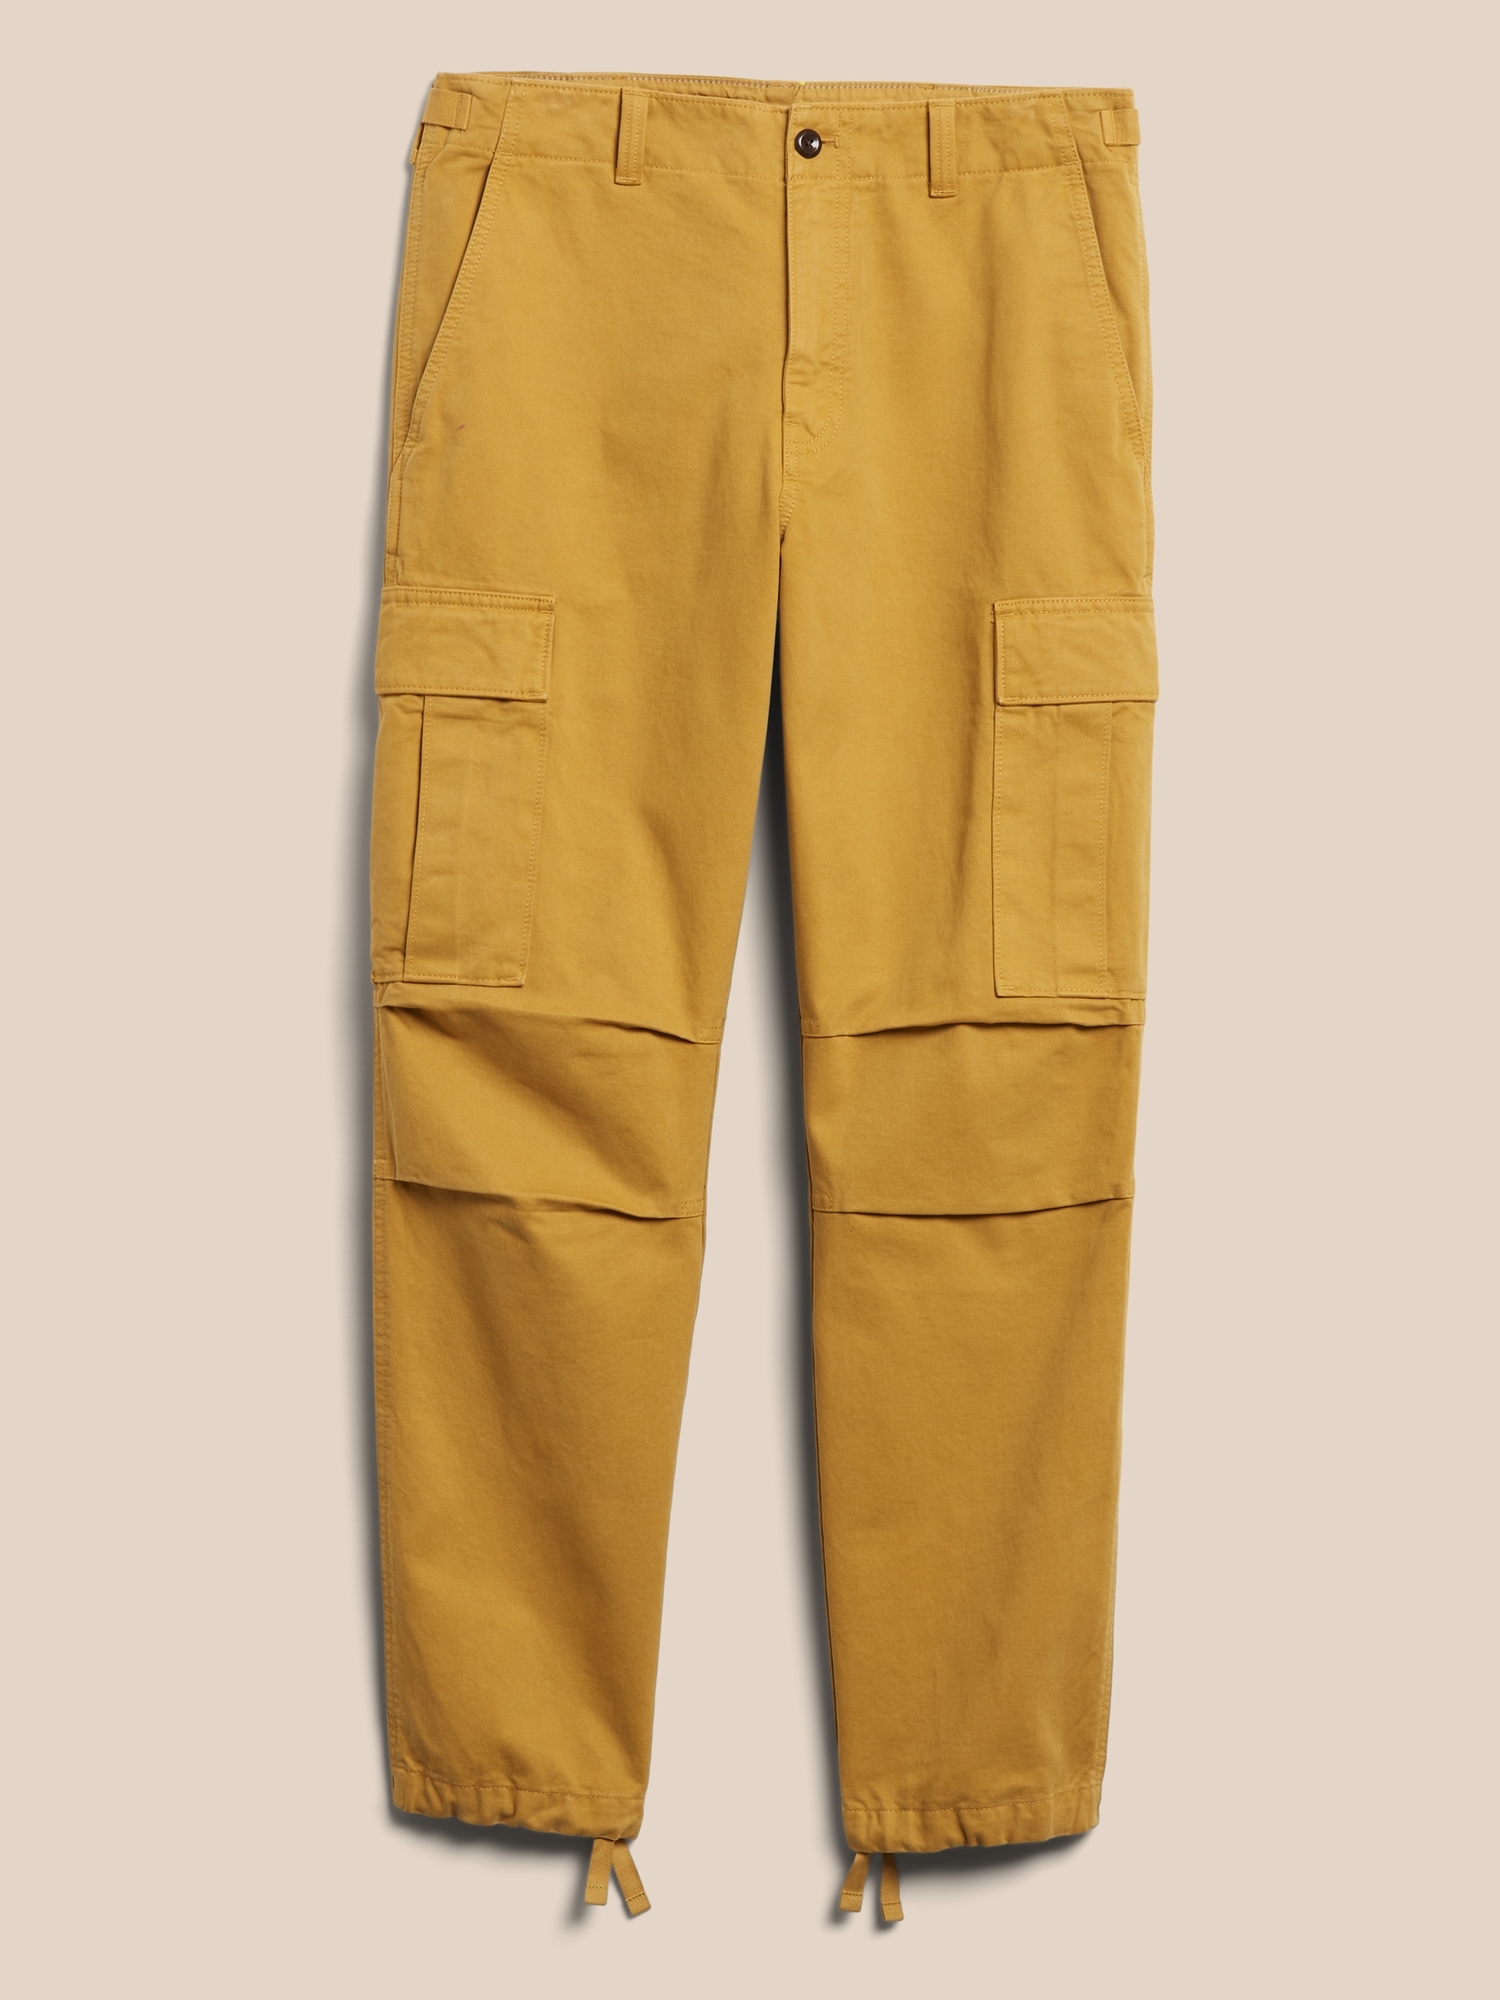 Banana Republic Relaxed Pants for Men for sale  eBay